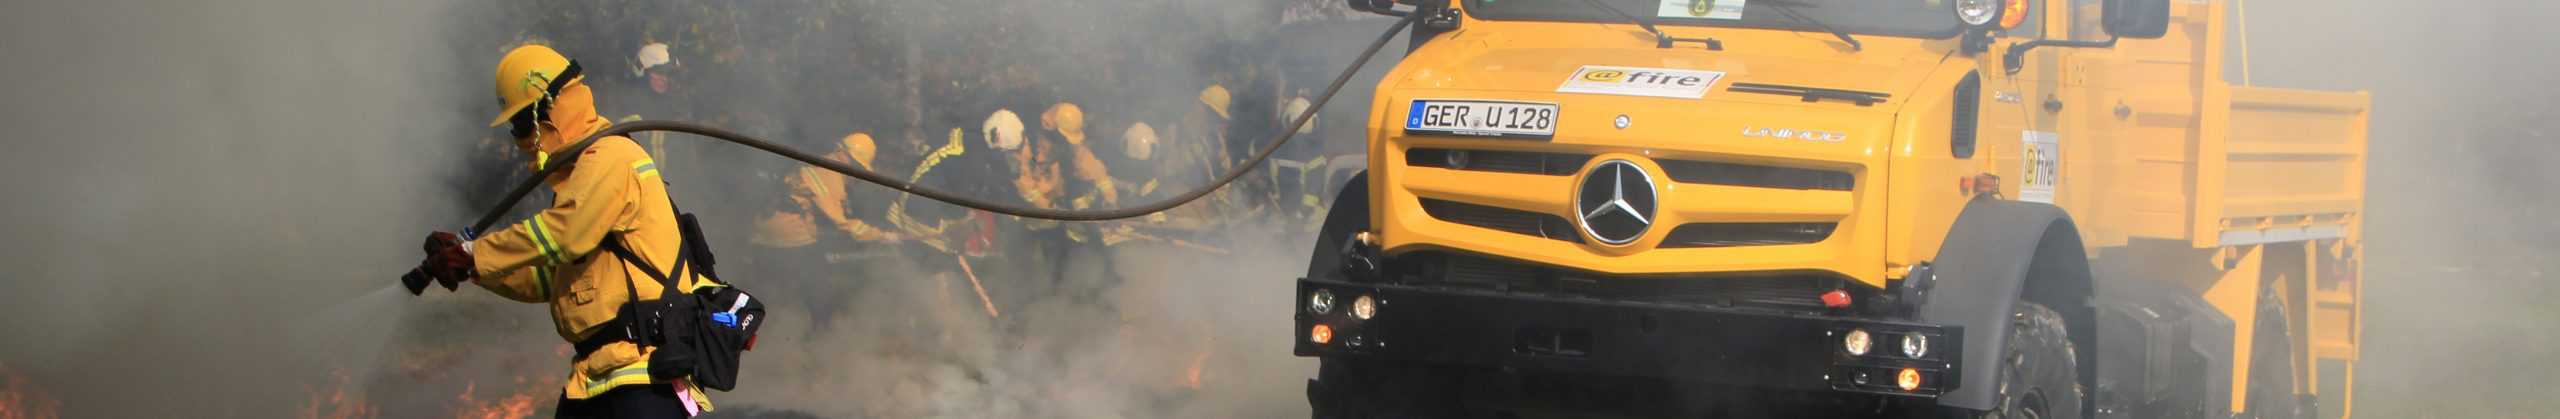 Doados carros de bombei­ros entre­gues aos bombei­ros ucranianos